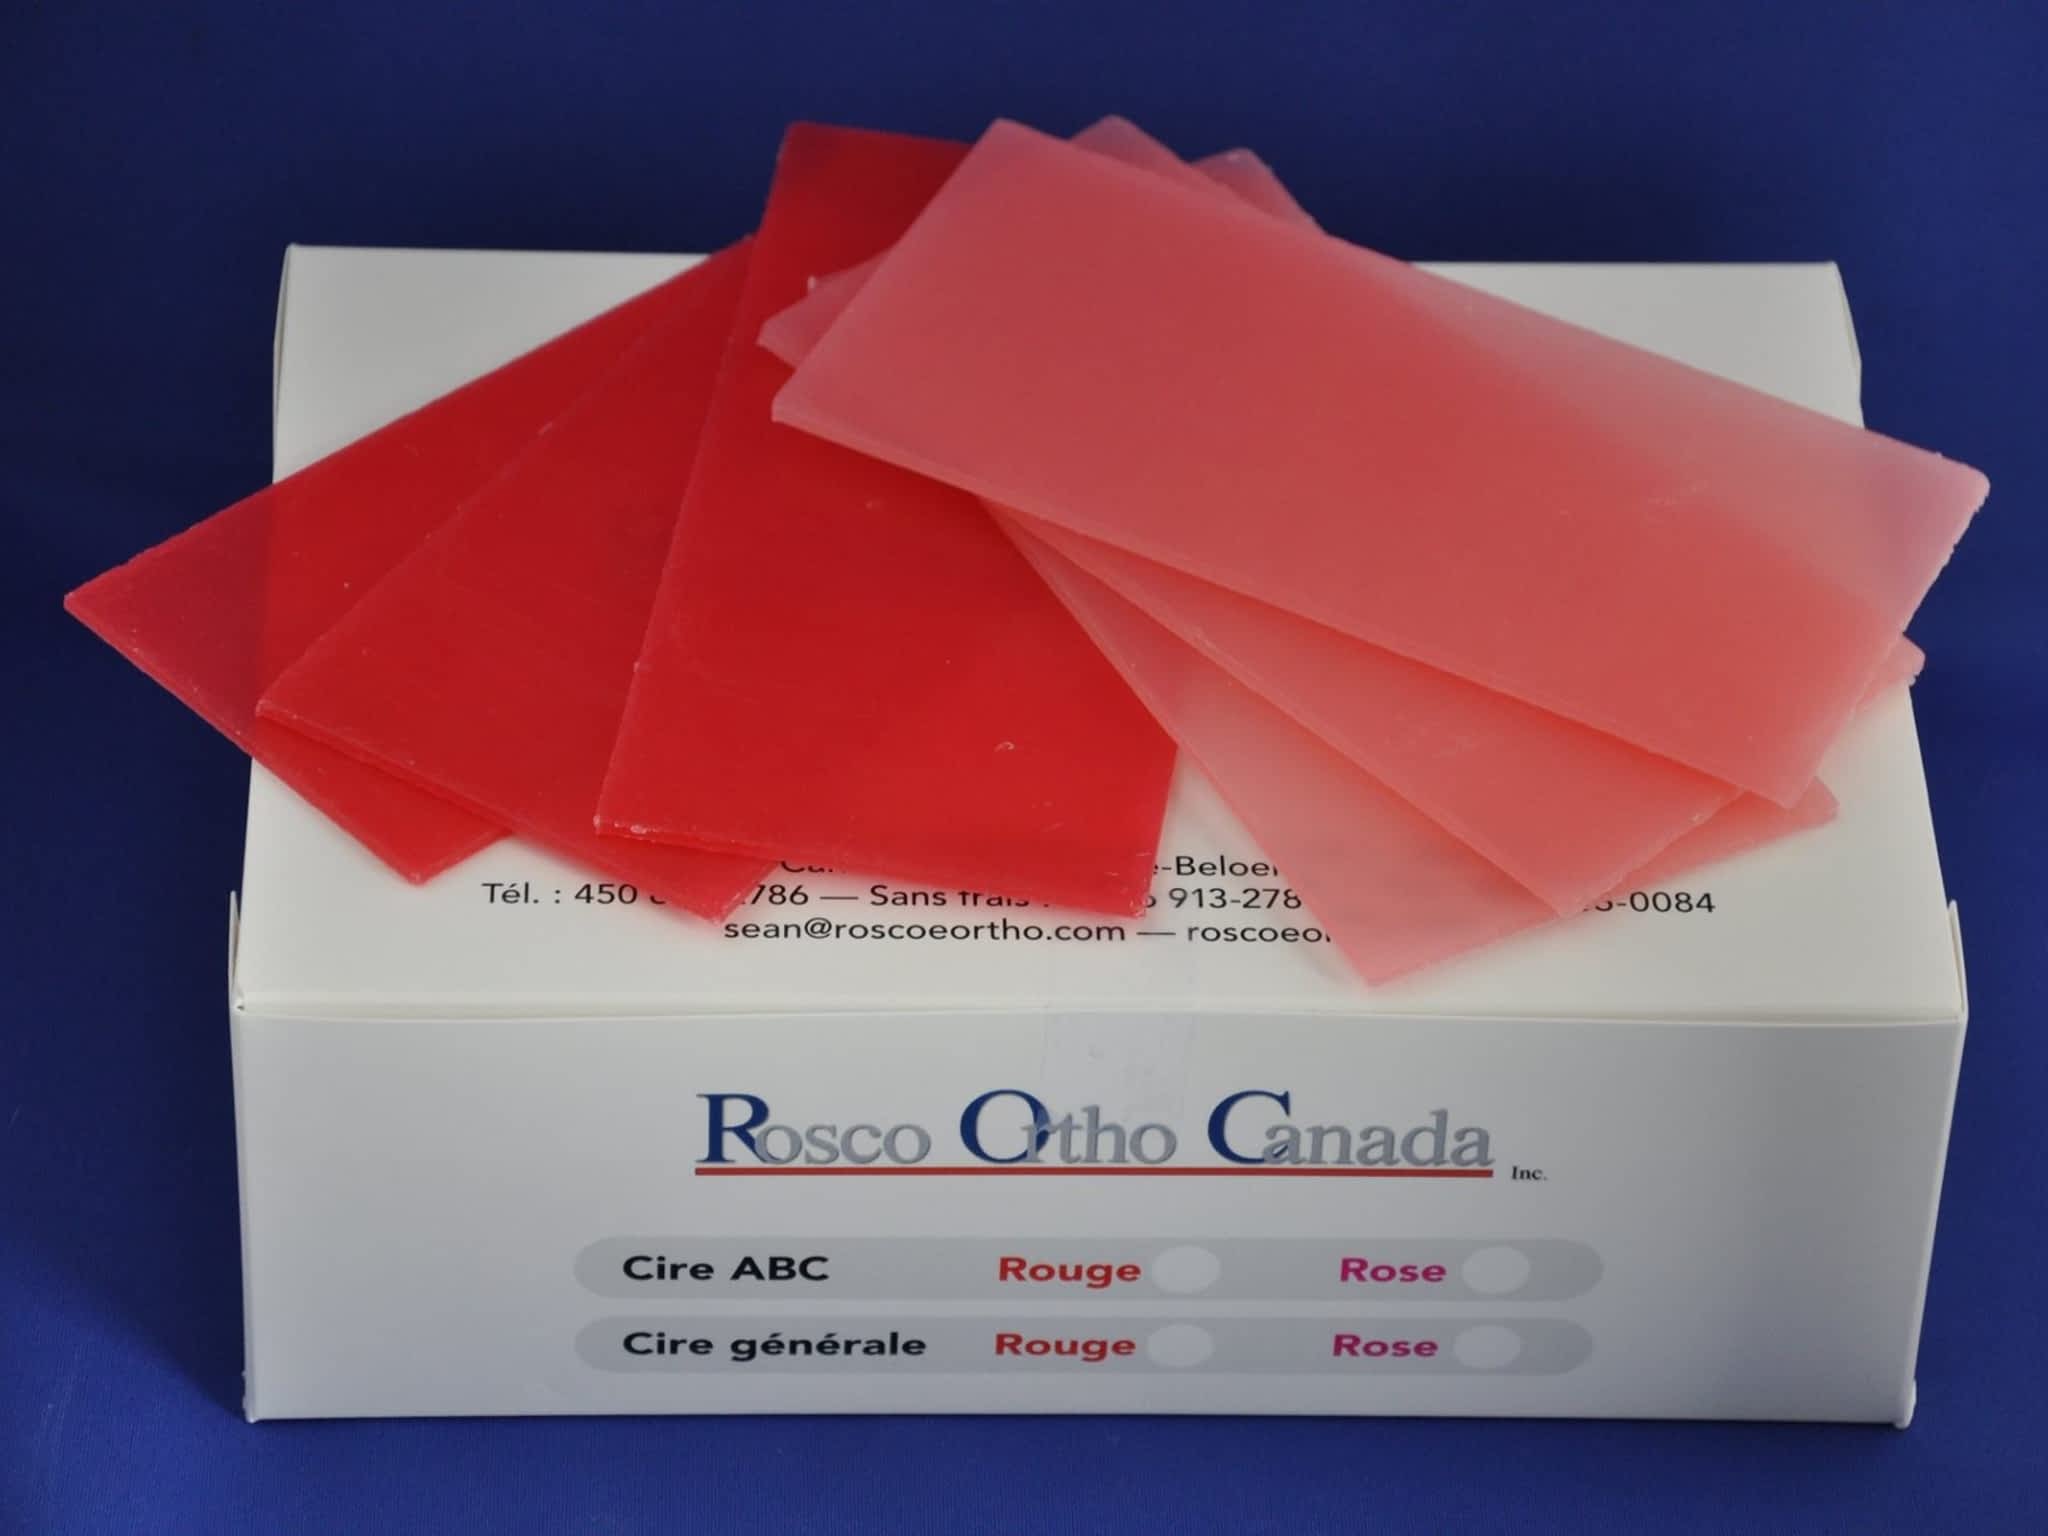 photo Rosco Ortho Canada Inc